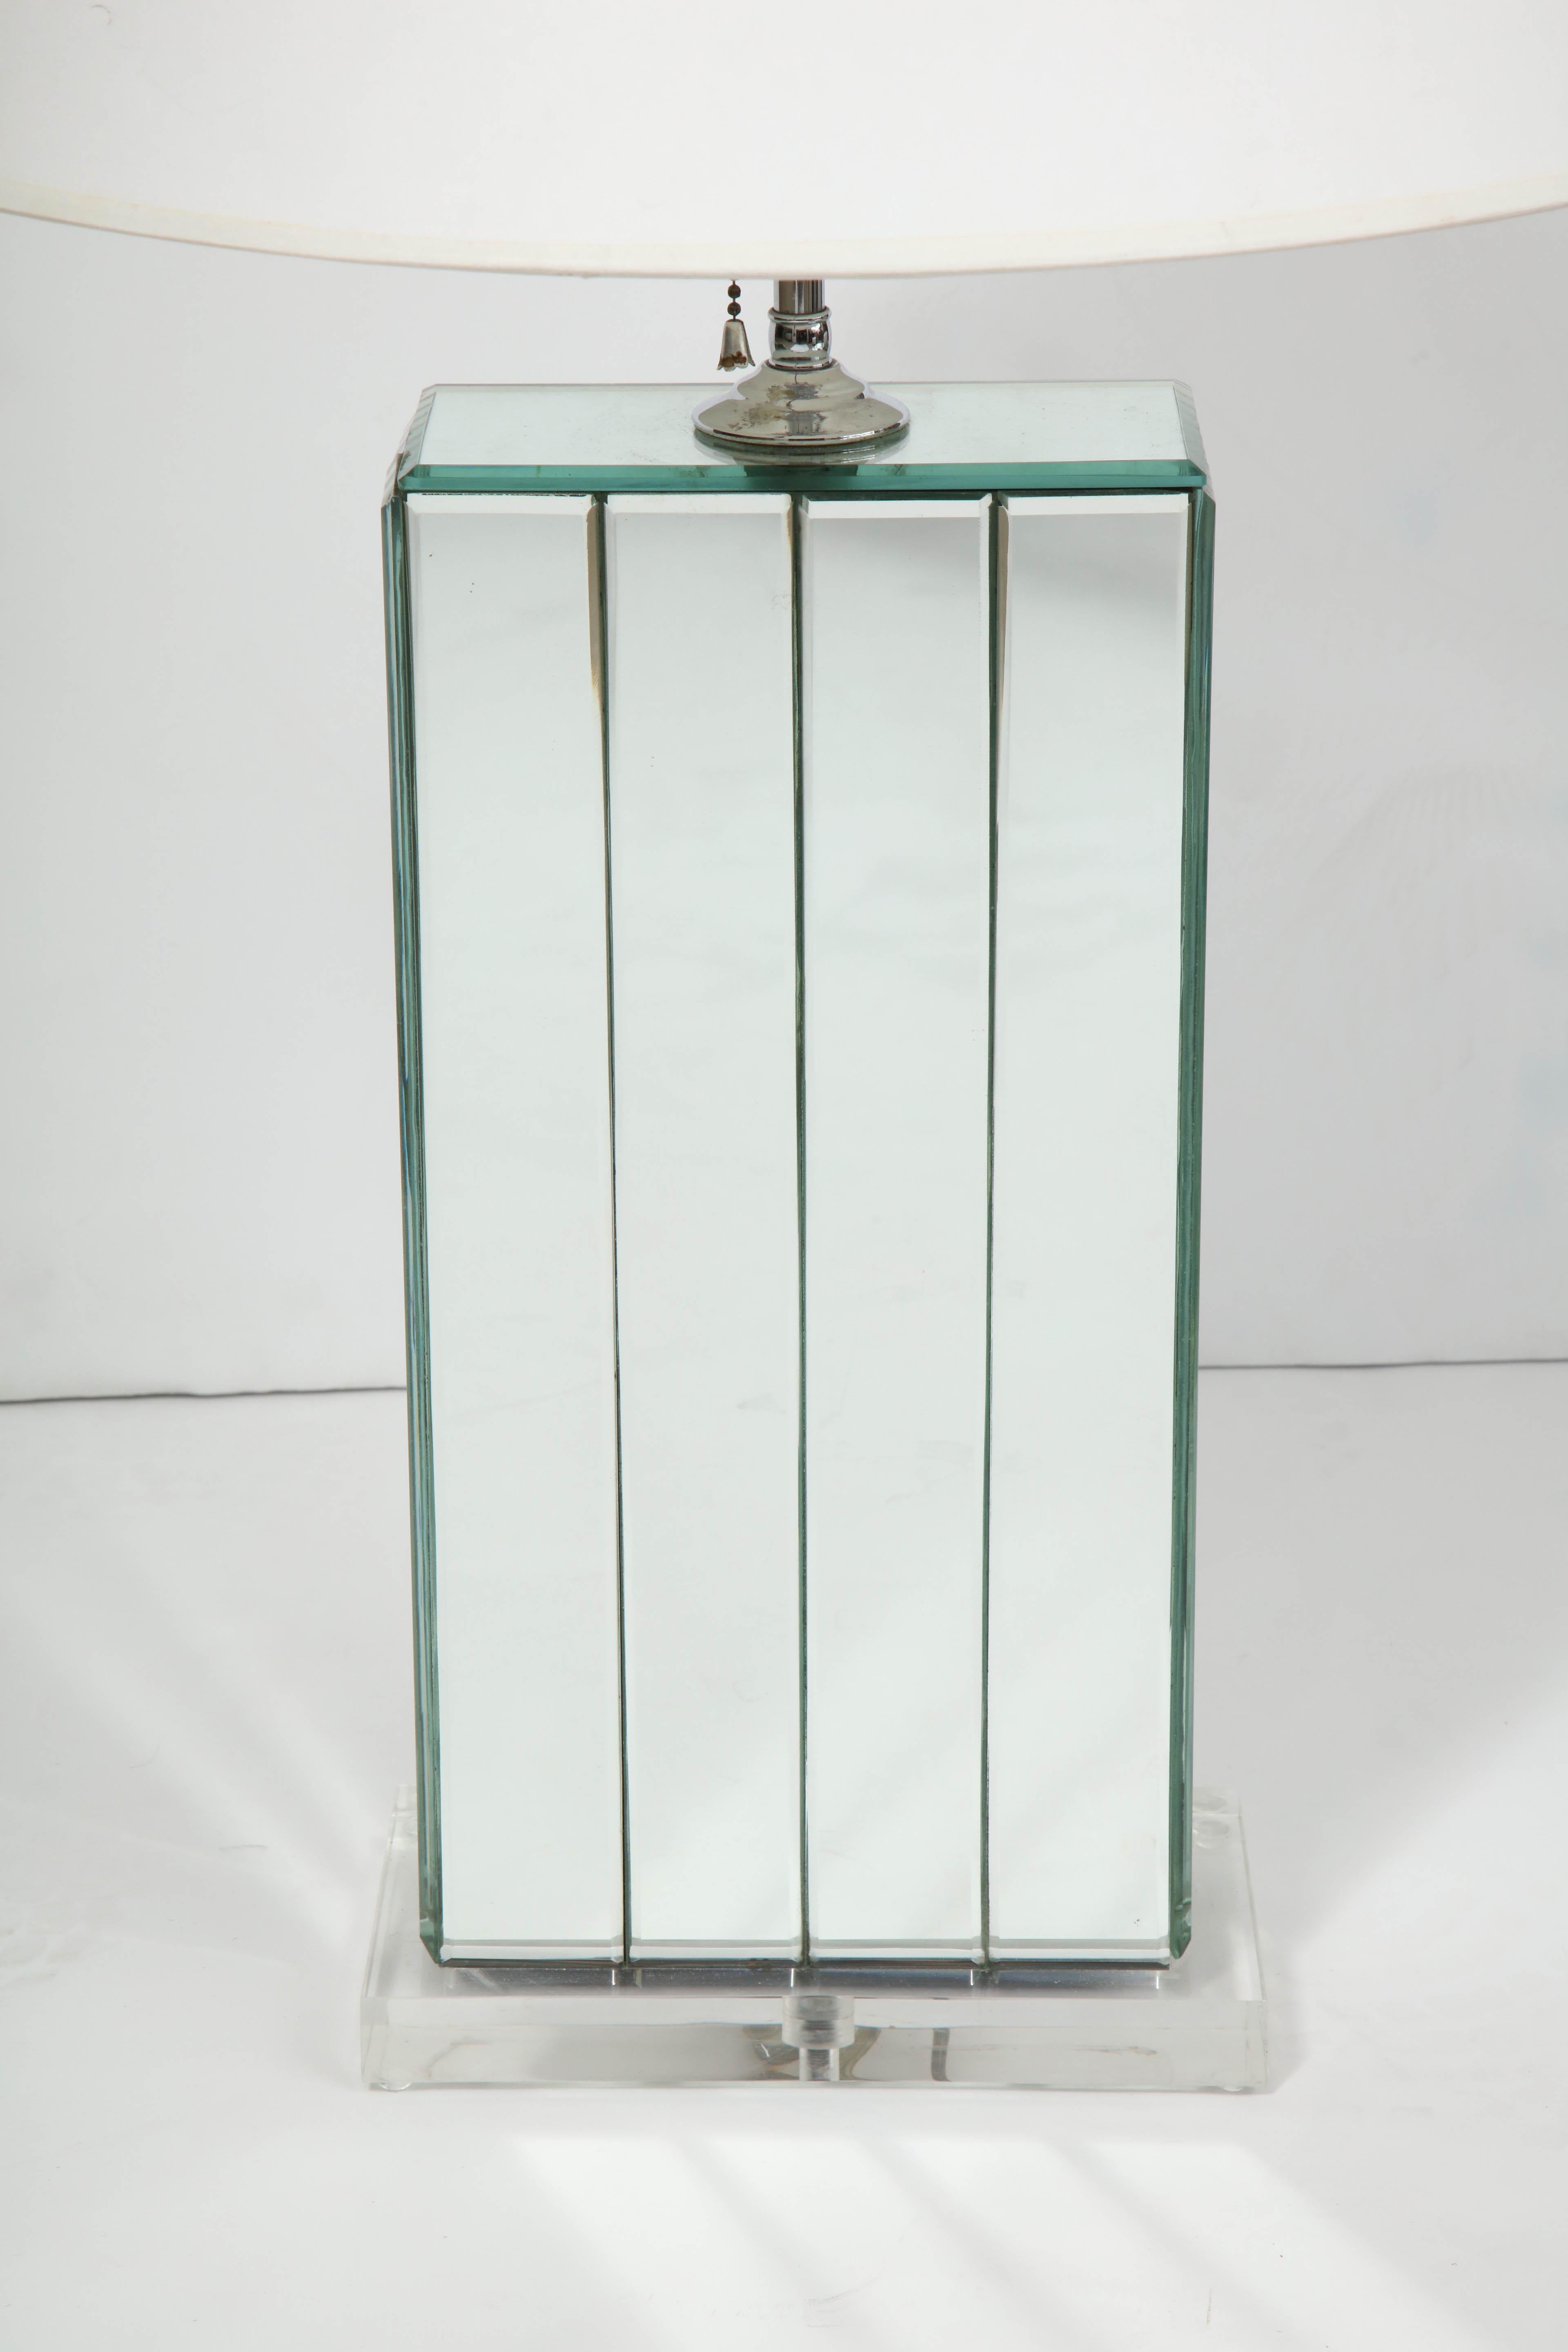 20th century modern mirrored lamp on rectangular Lucite base, 